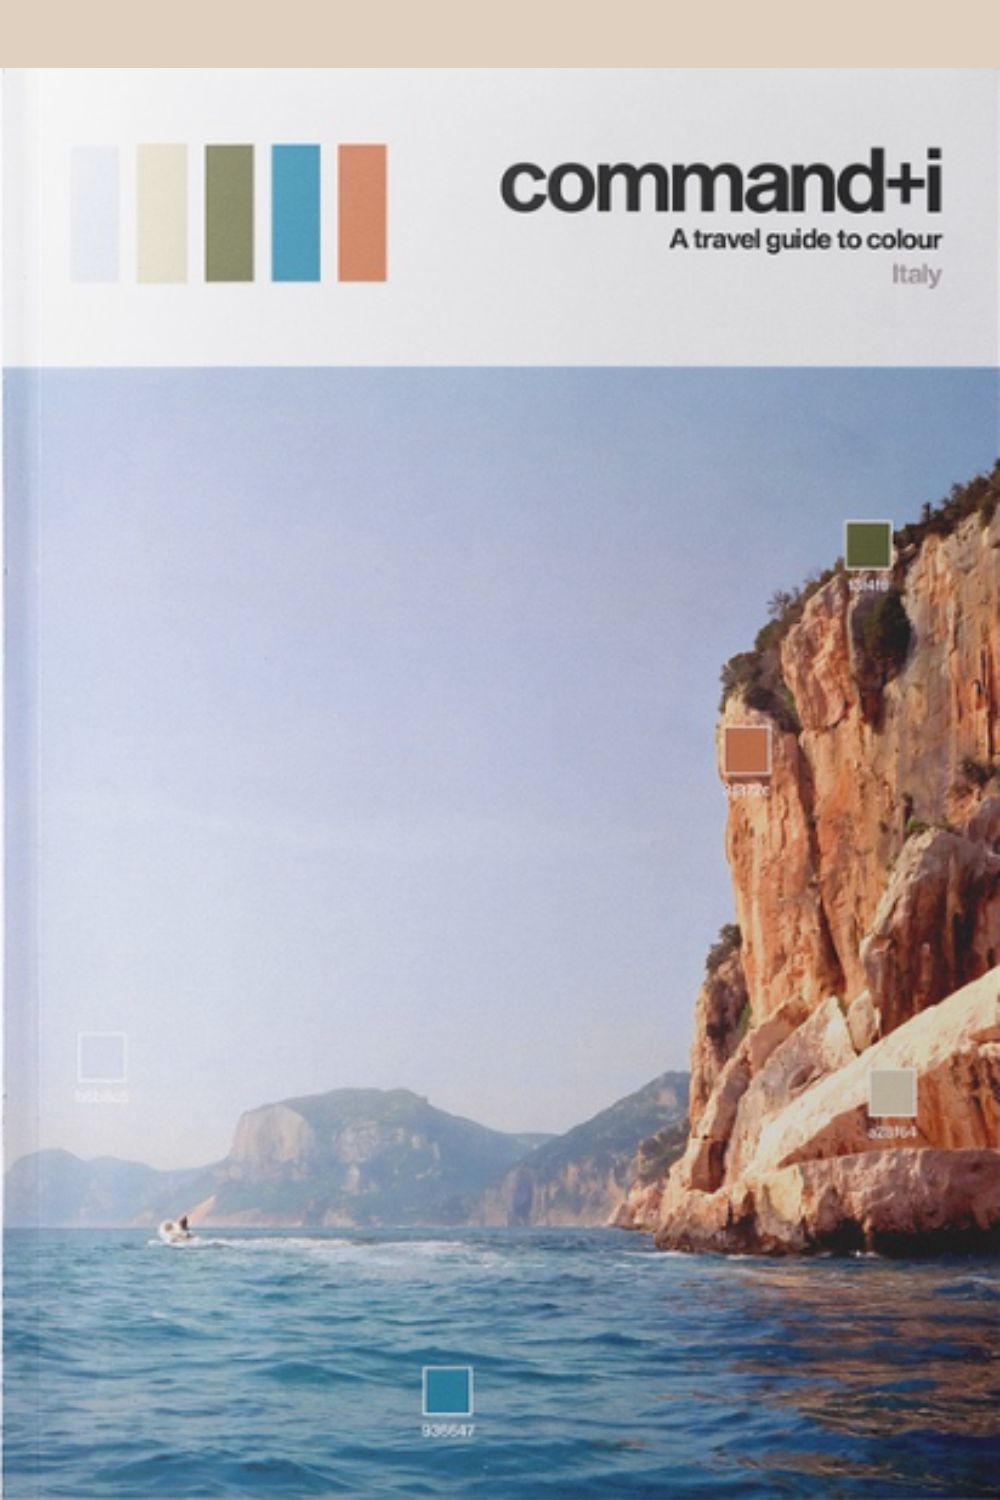 Command+i Magazine Issue 3 Italy cover